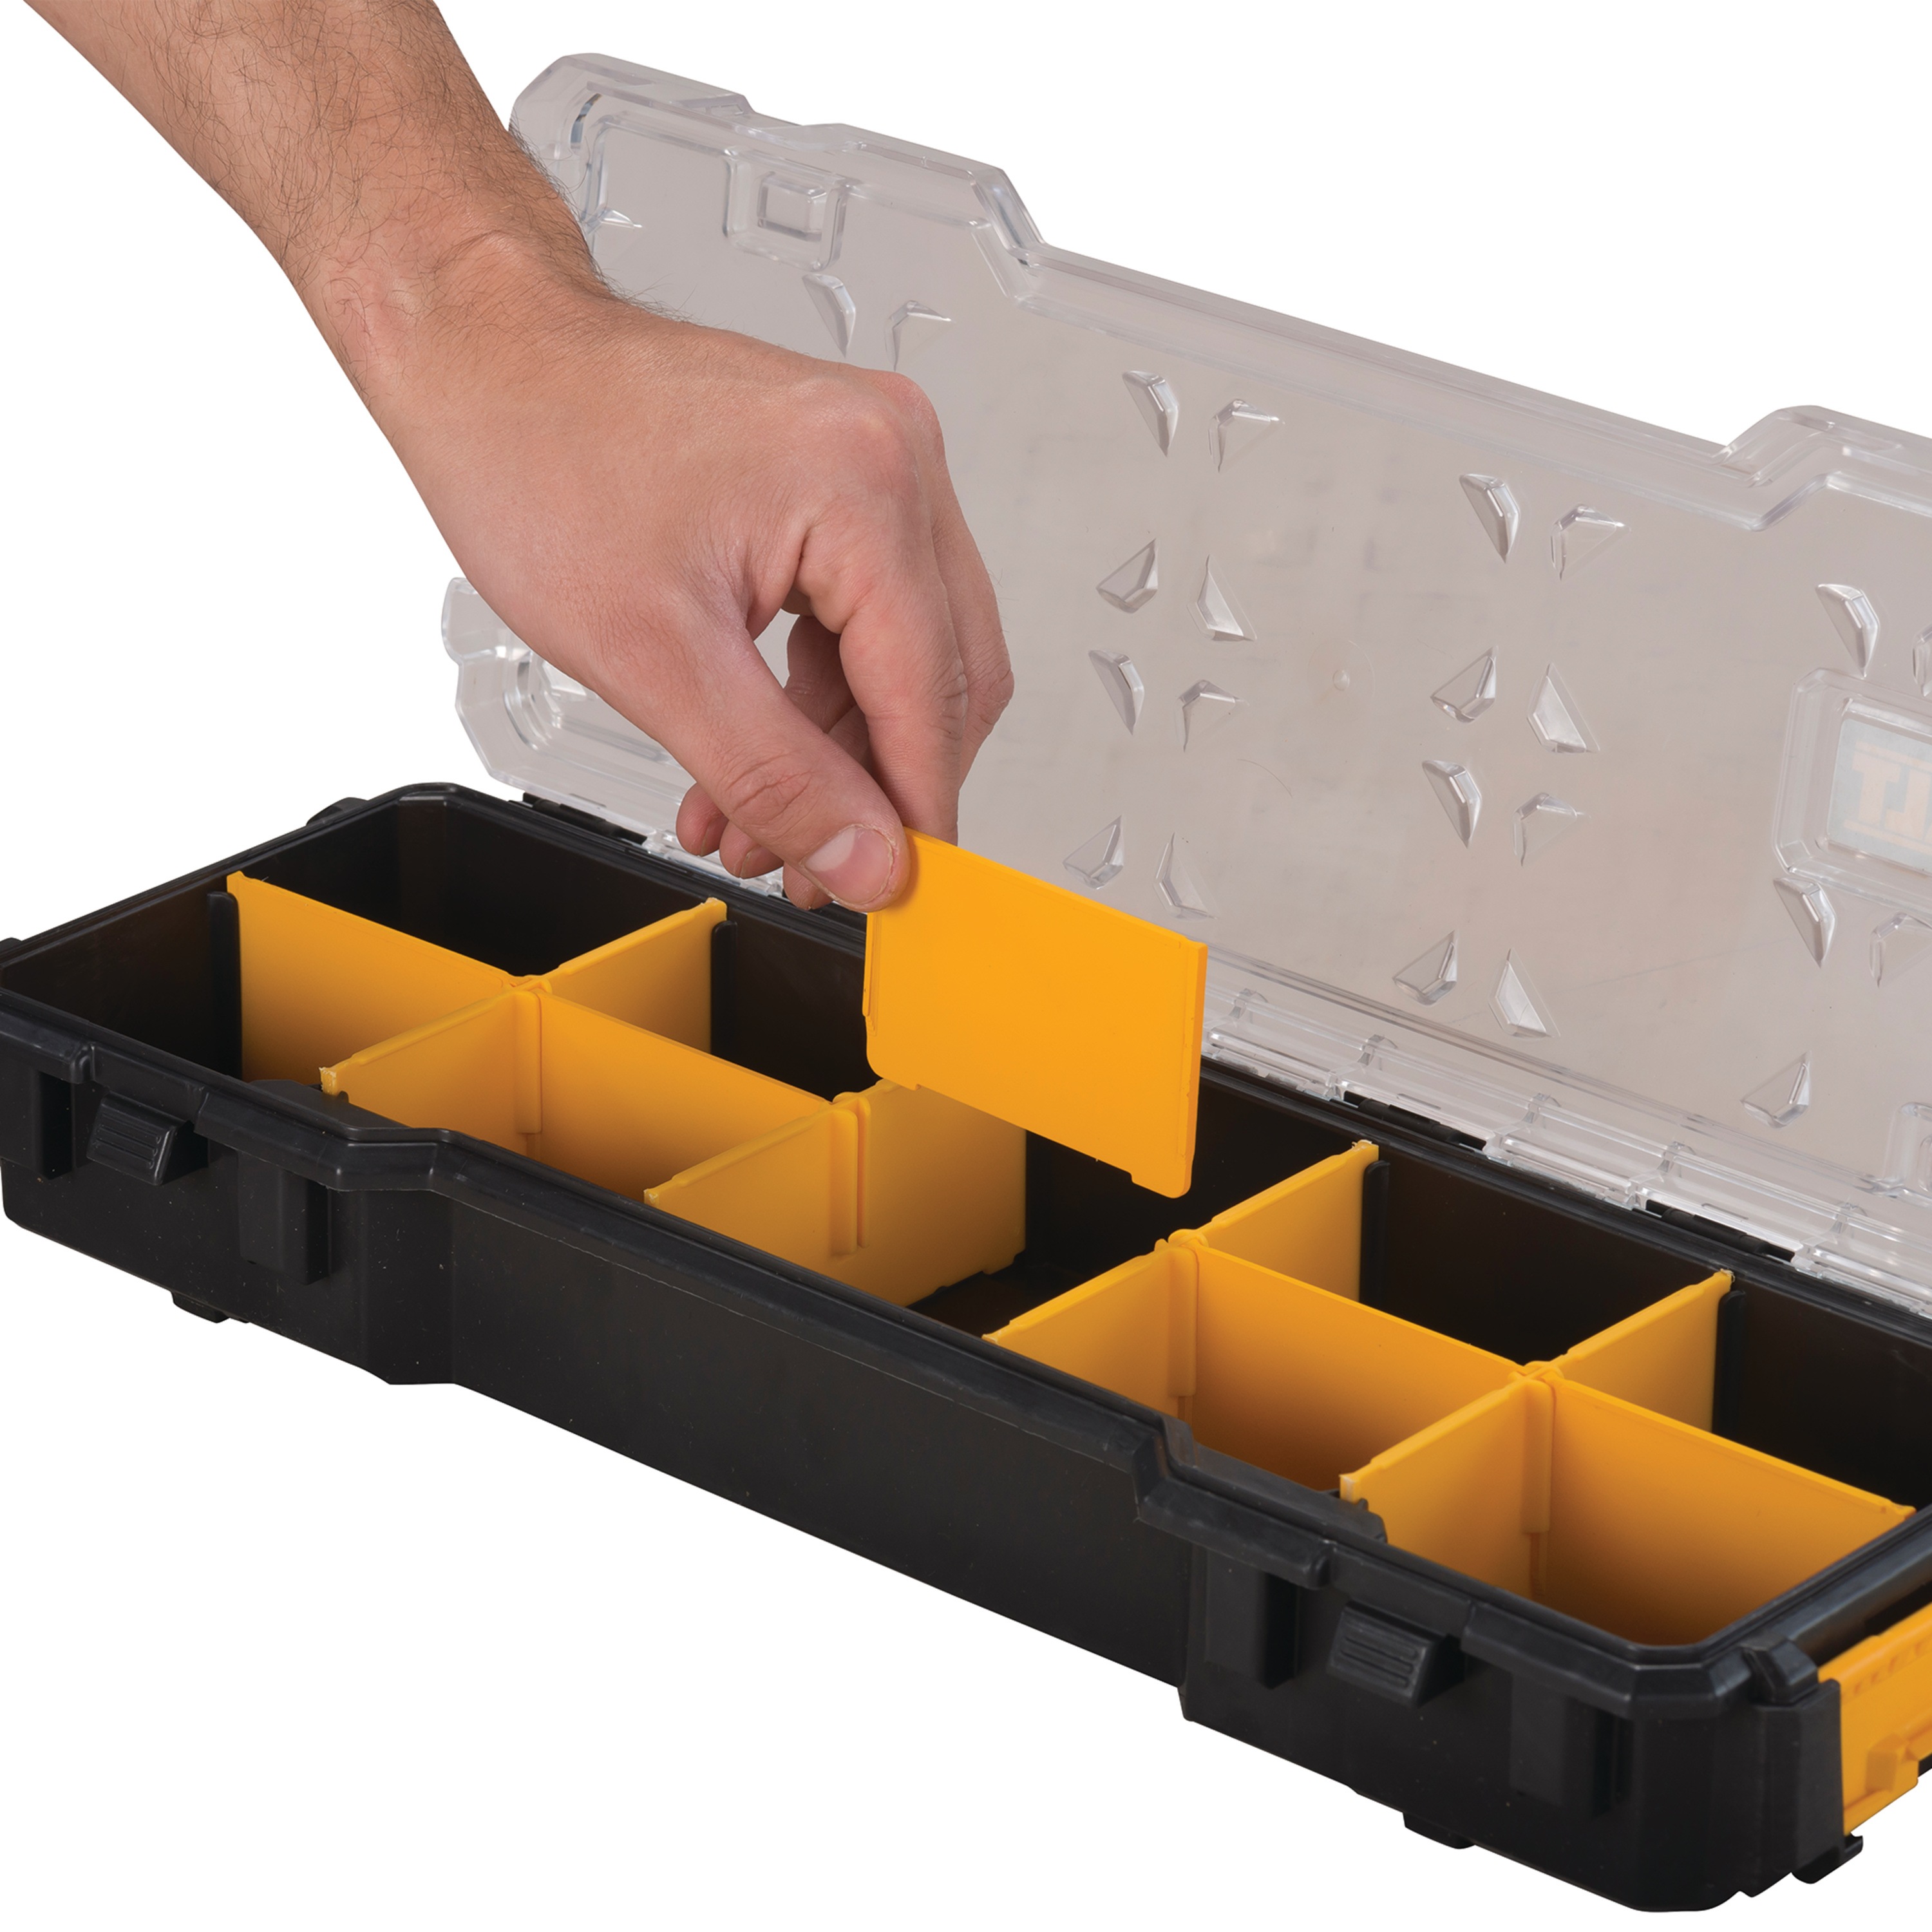 8 Grids subassembly wrapper Plastic Element Box Storage